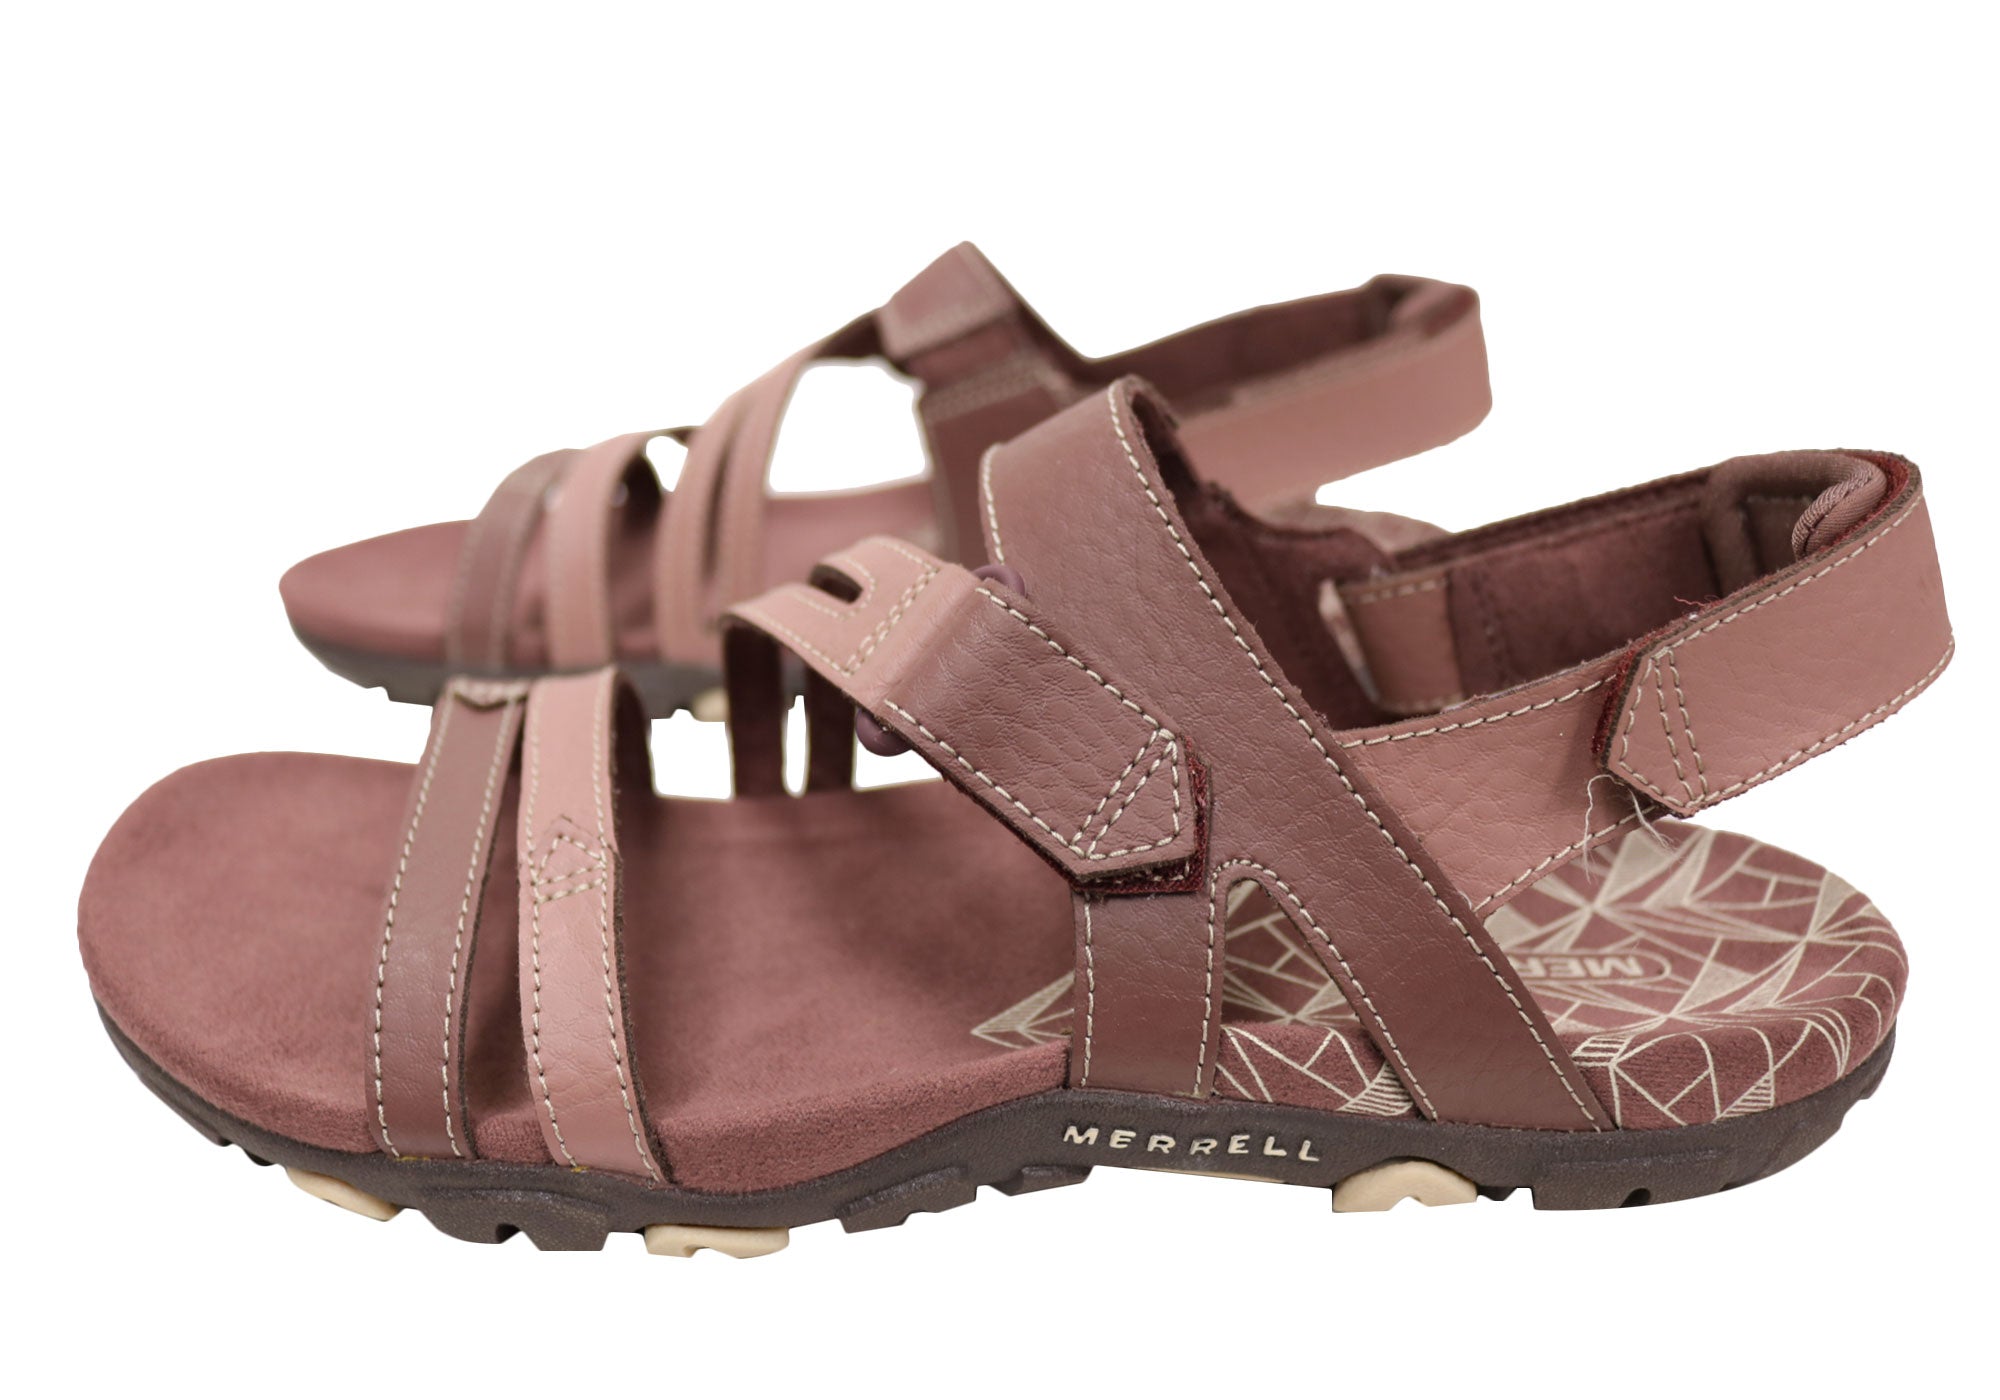 MERRELL SANDSPUR ROSE Outdoor Leather Sandal Granite/ Dragonfly Women's  Size 6 $38.99 - PicClick